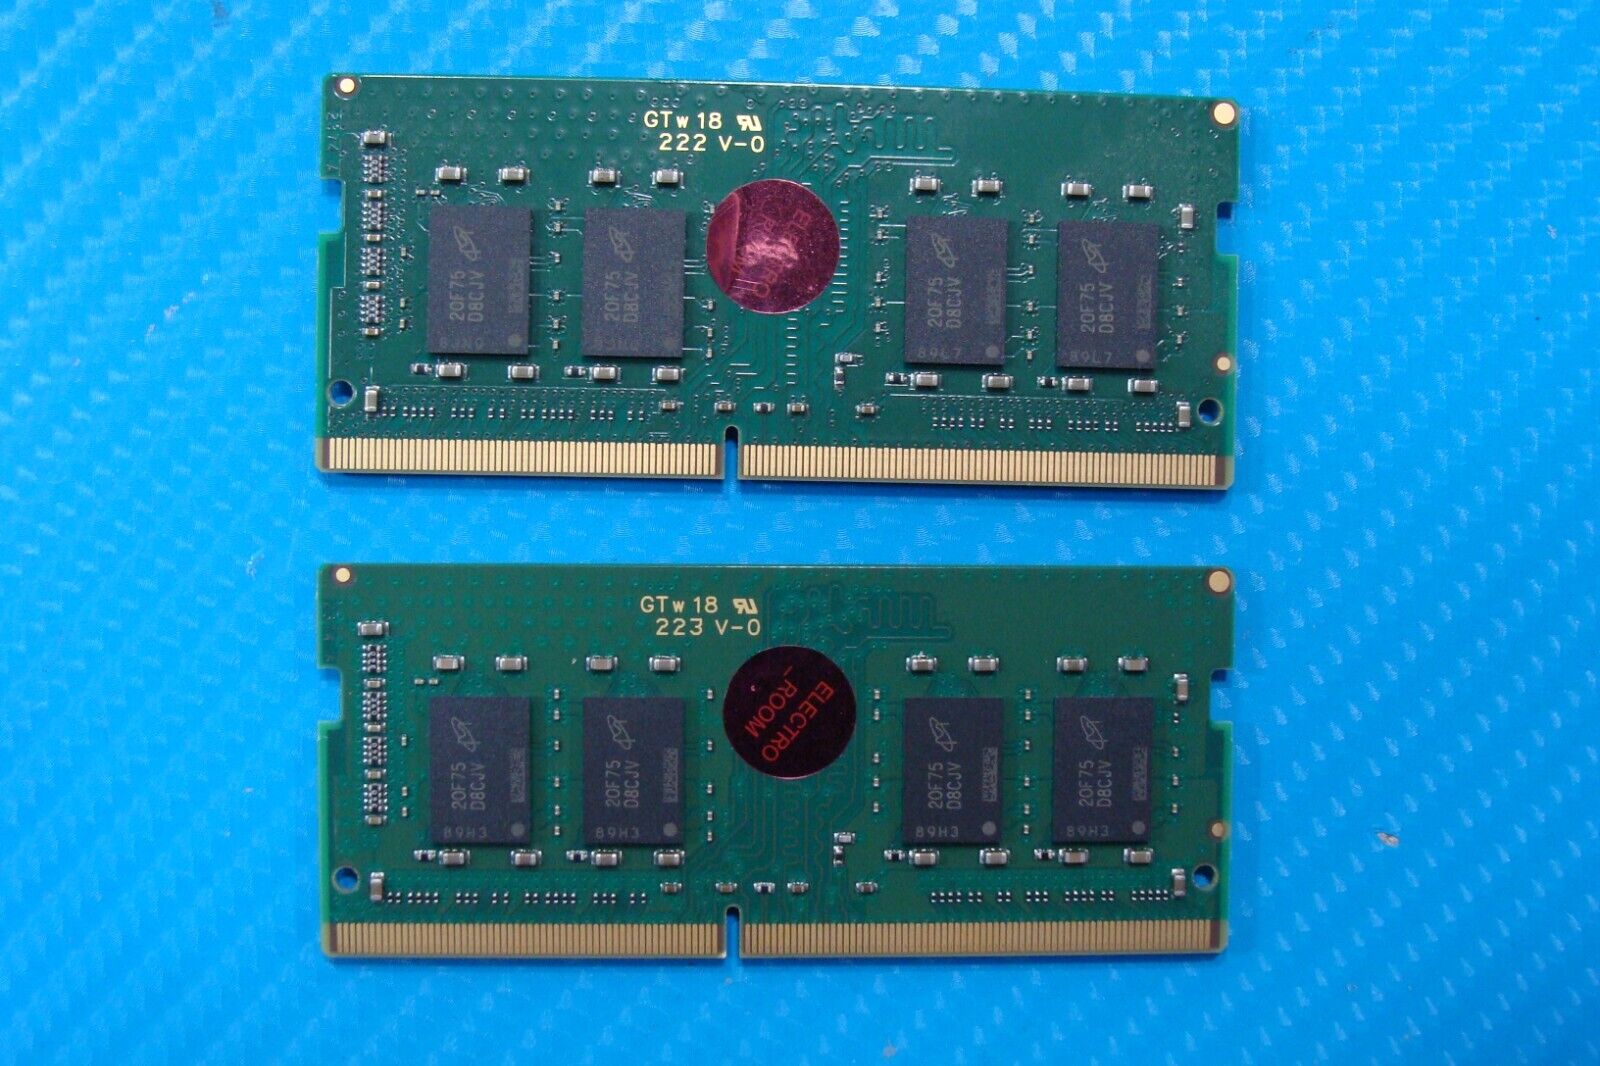 Acer TMP214-41-G2-R85M Crucial 32GB 2x16GB Memory RAM SO-DIMM CT16G4SFRA32A.M8FF